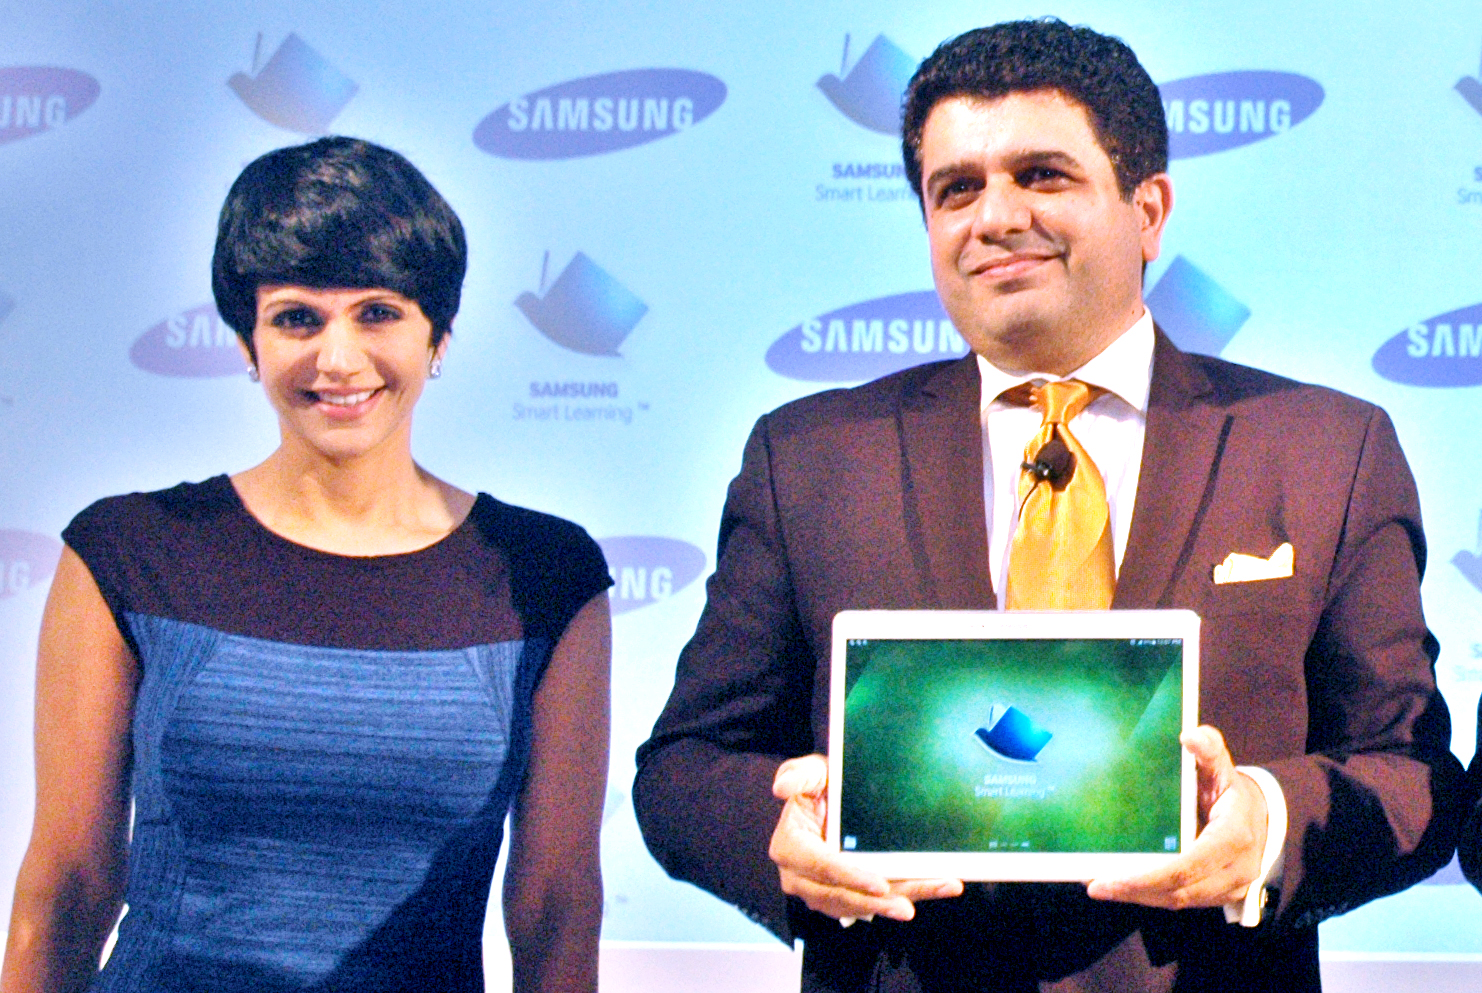 Actress Mandira Bedi and Tarun Mallik launch of Samsung’s Smart learning initiative